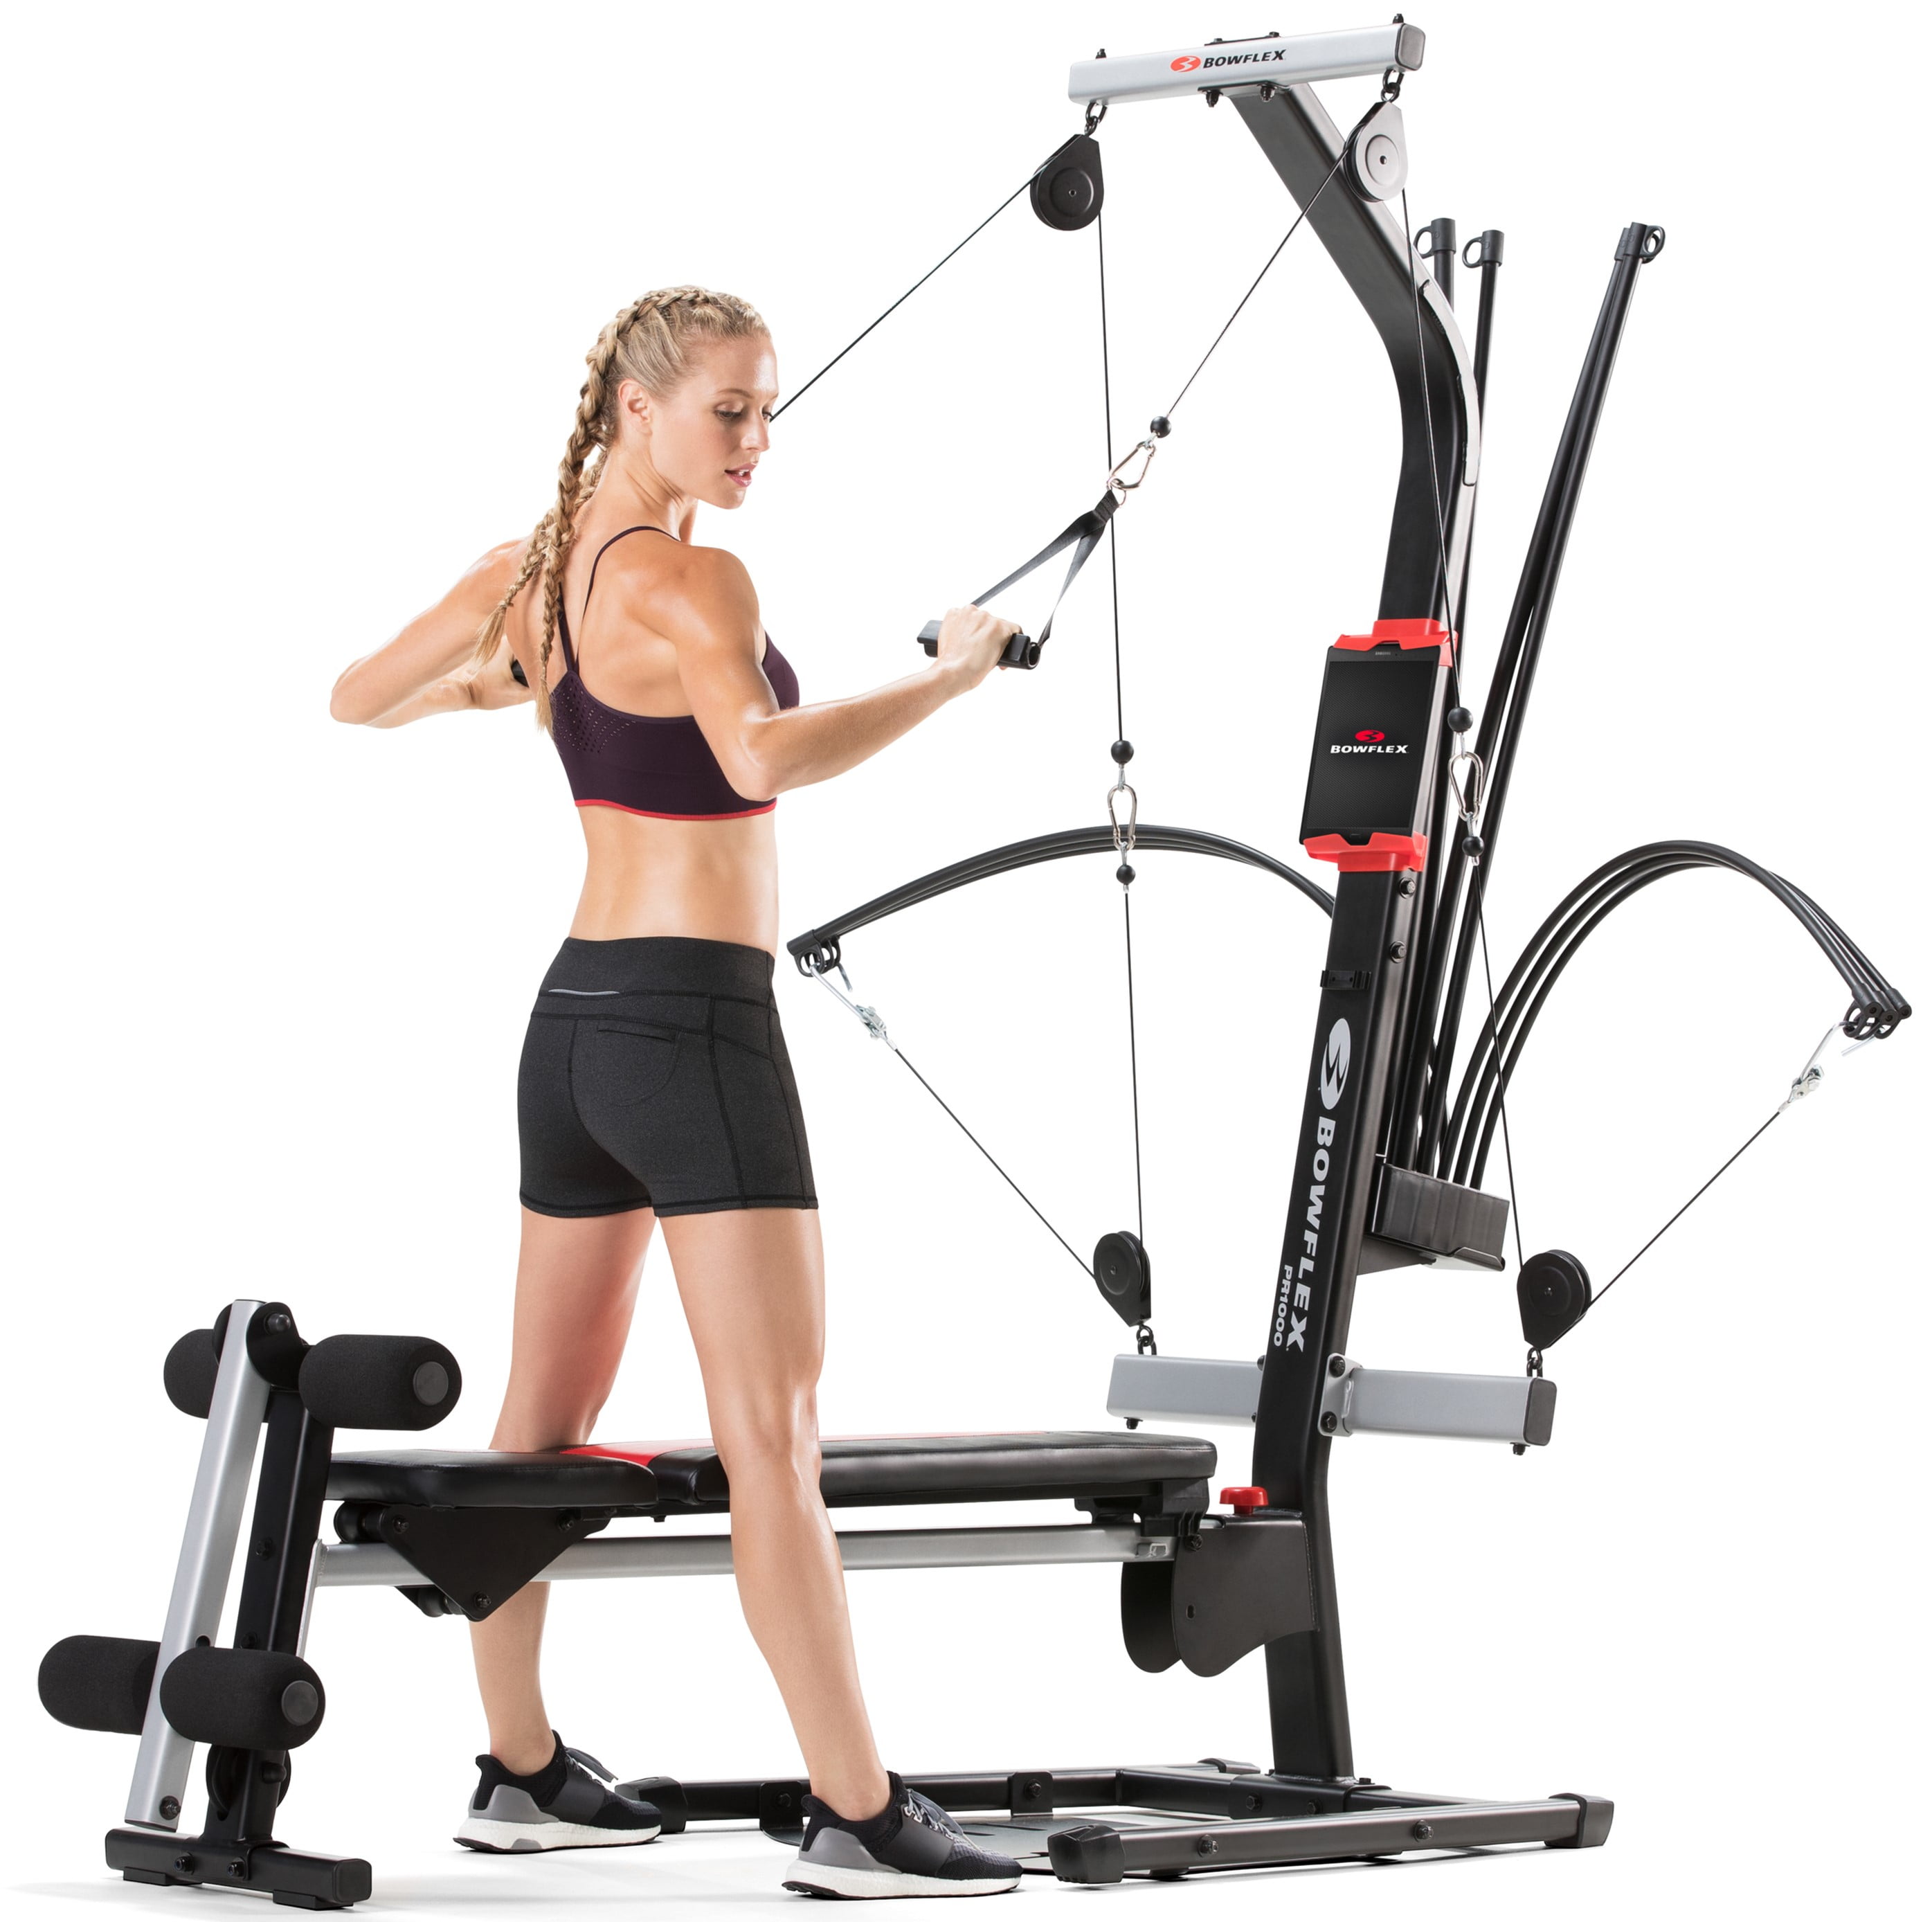 Bowflex Pr1000 Home Gym Weight Lifting